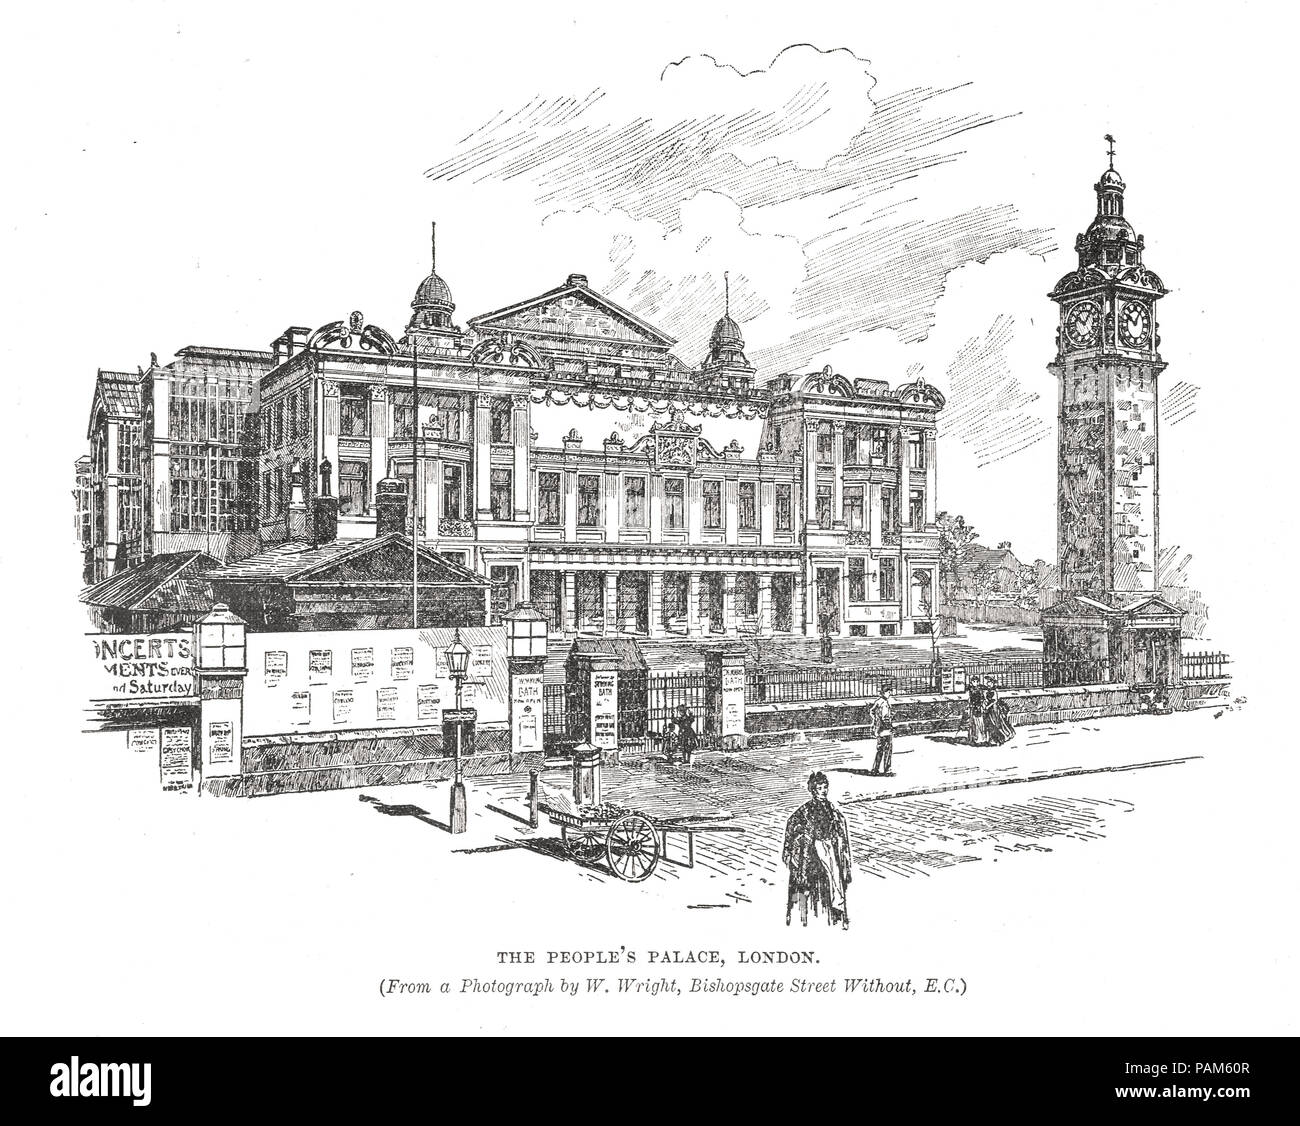 Die People's Palace, Mile End Road, London, England, 19. Jahrhundert Ansicht der alten Palast des Volkes Stockfoto